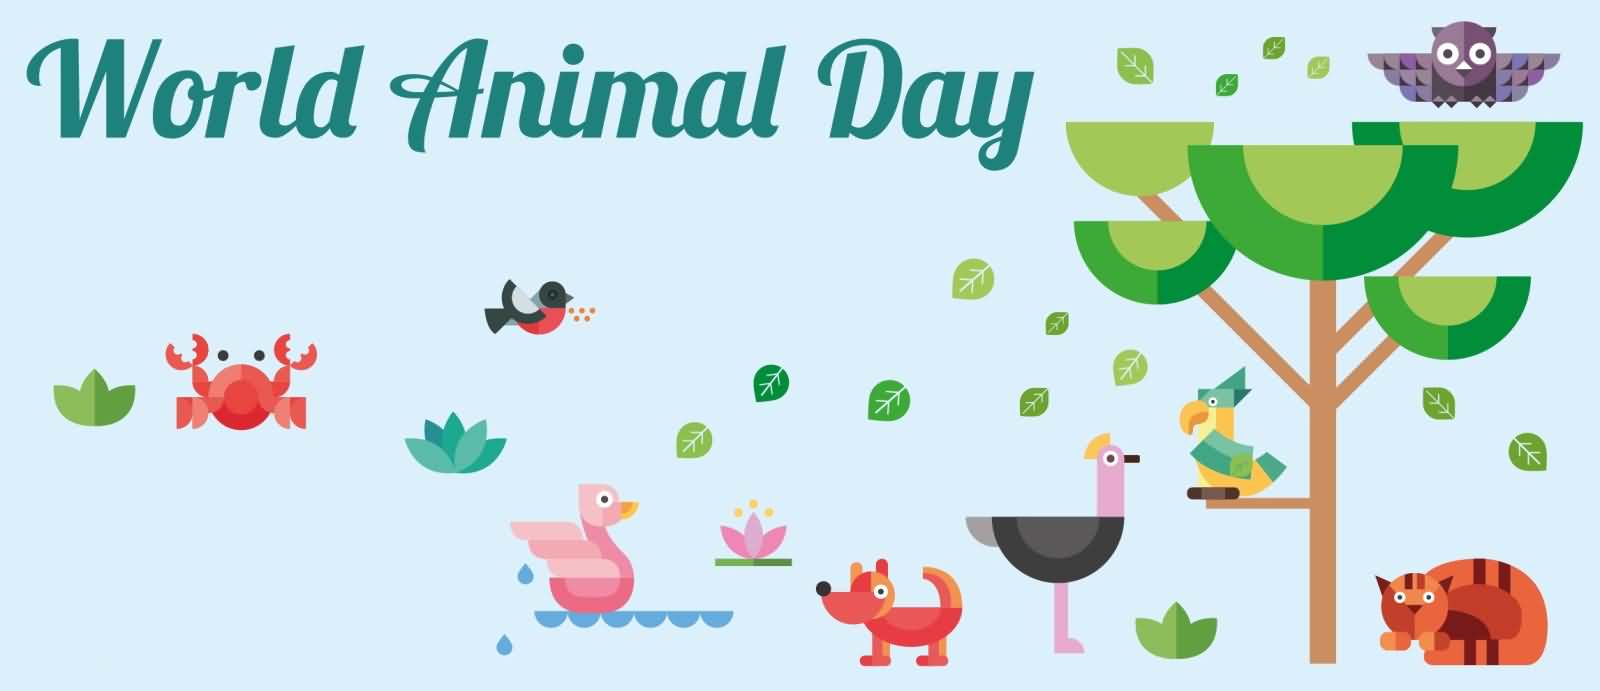 World Animal Day Beautiful Illustration Of Animals